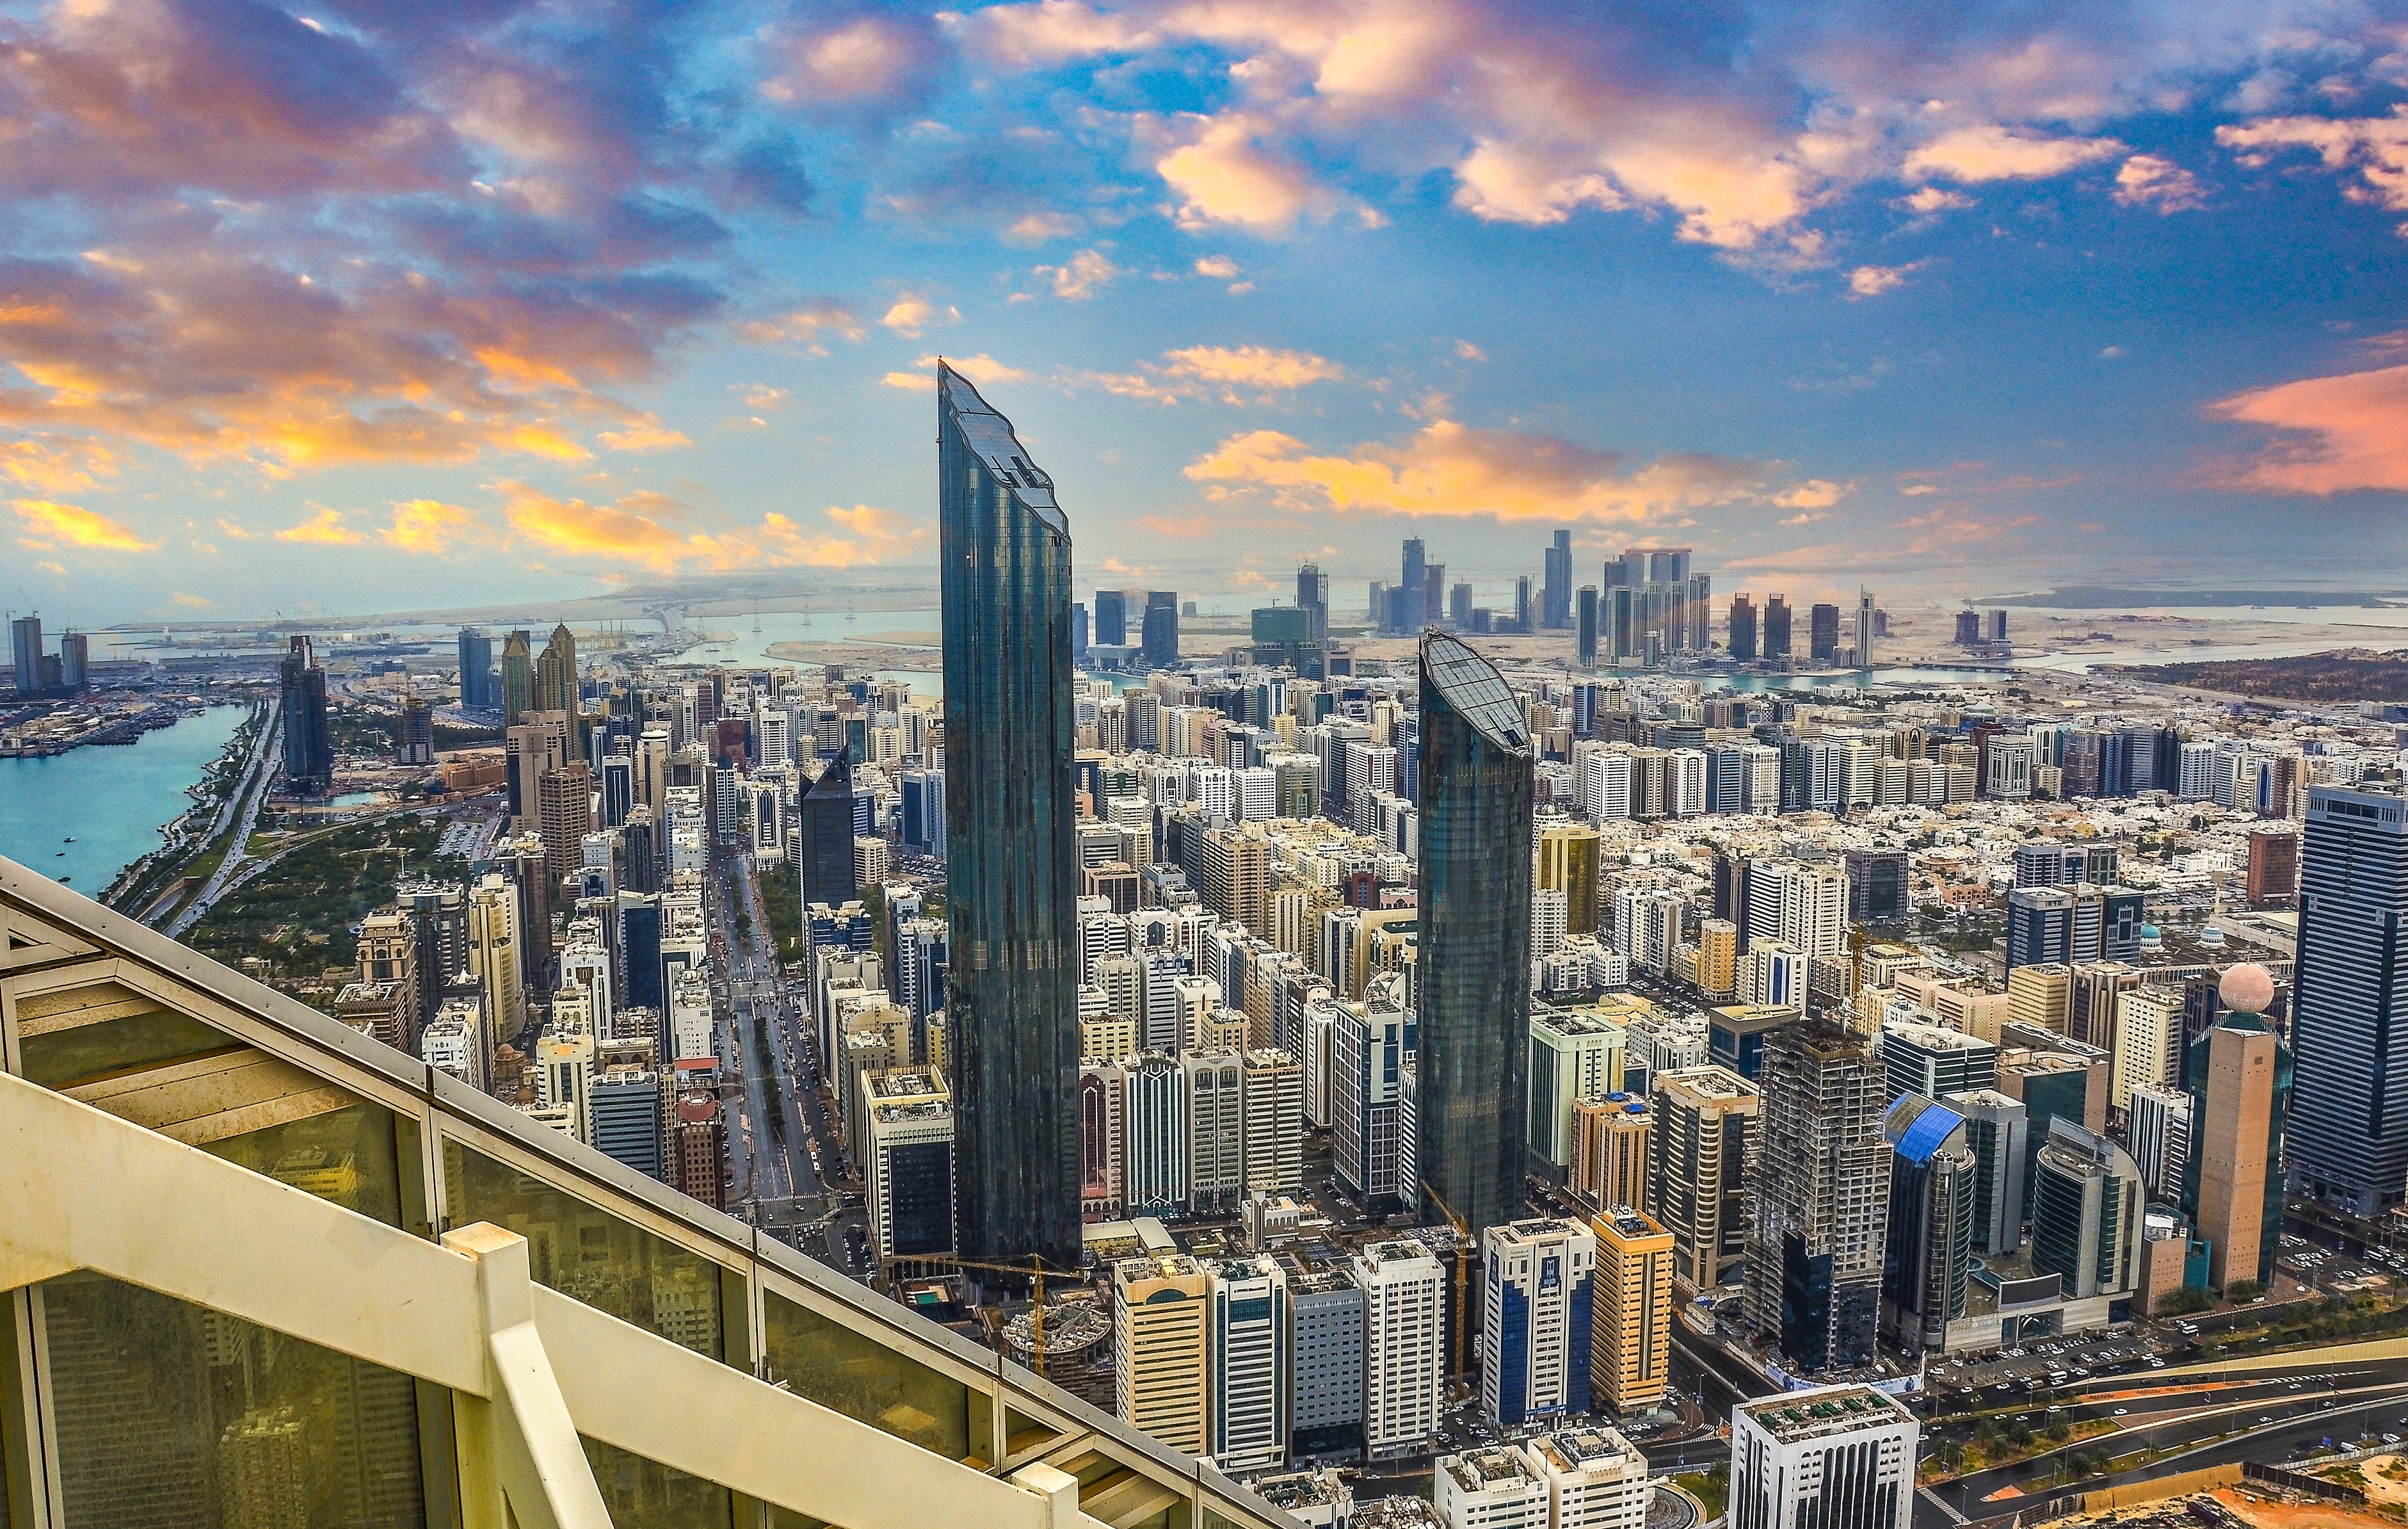 A view of Abu Dhabi, United Arab Emirates. Photo: Shutterstock